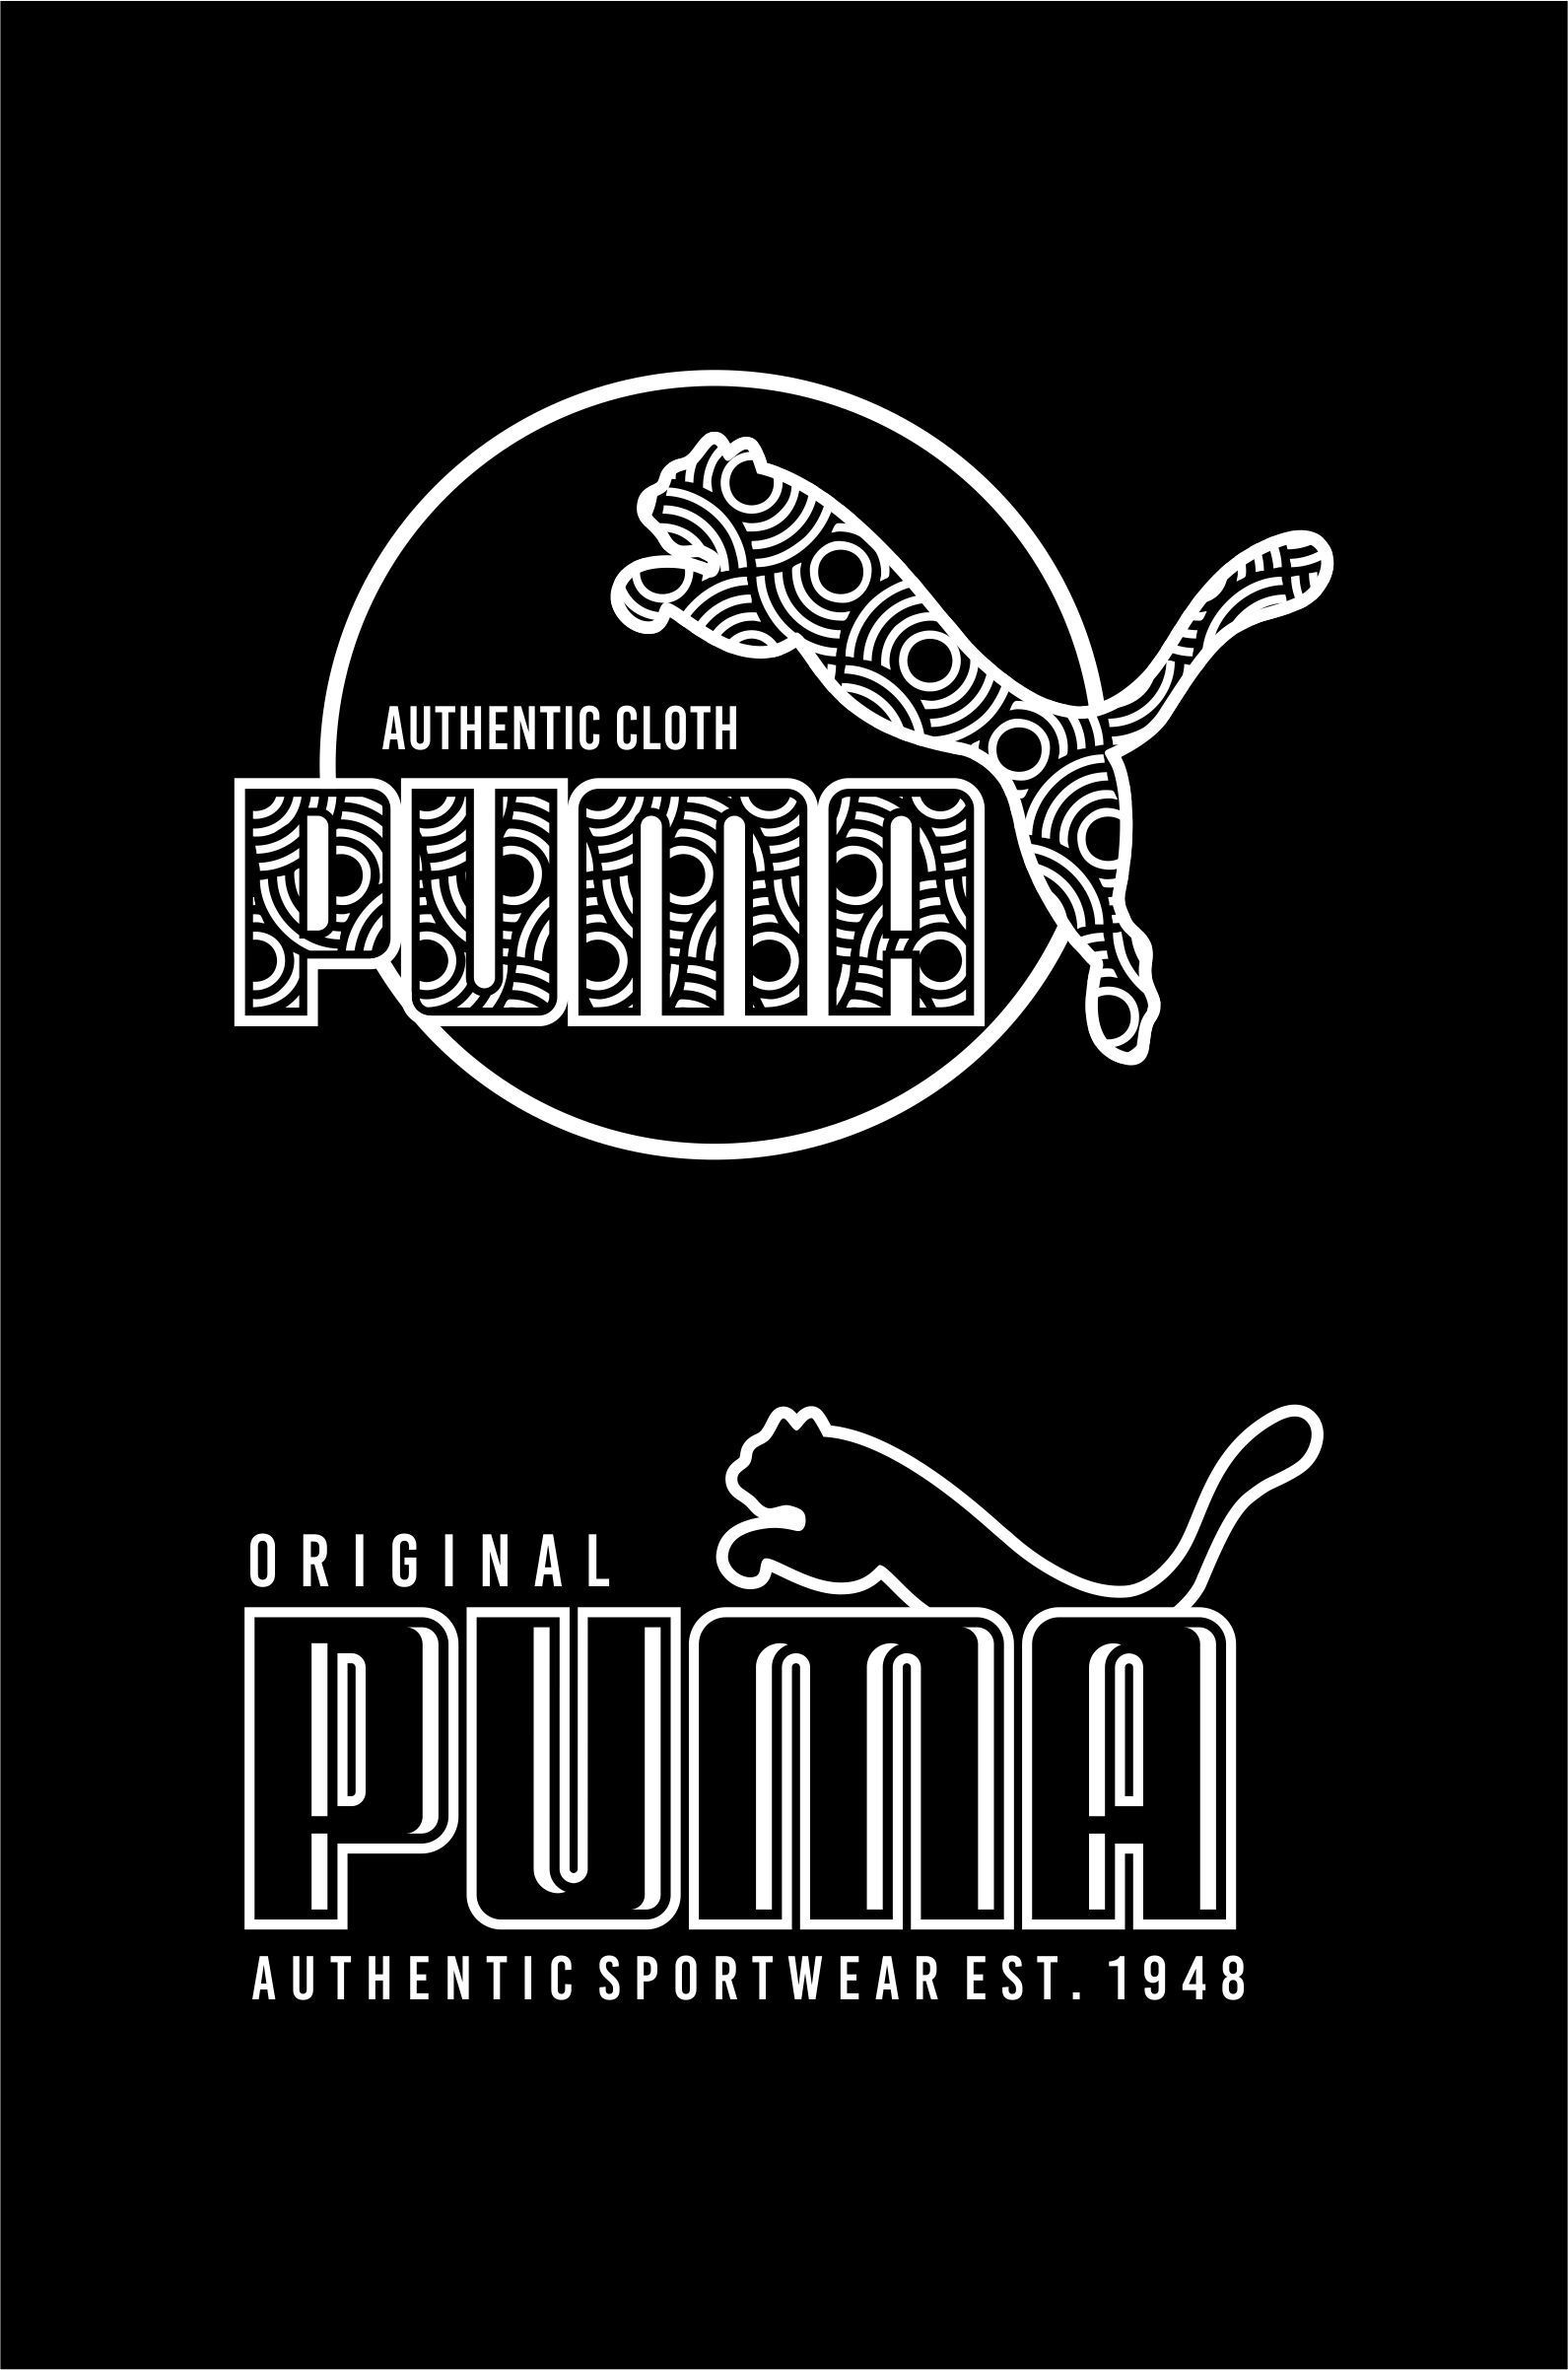 puma original wallpaper